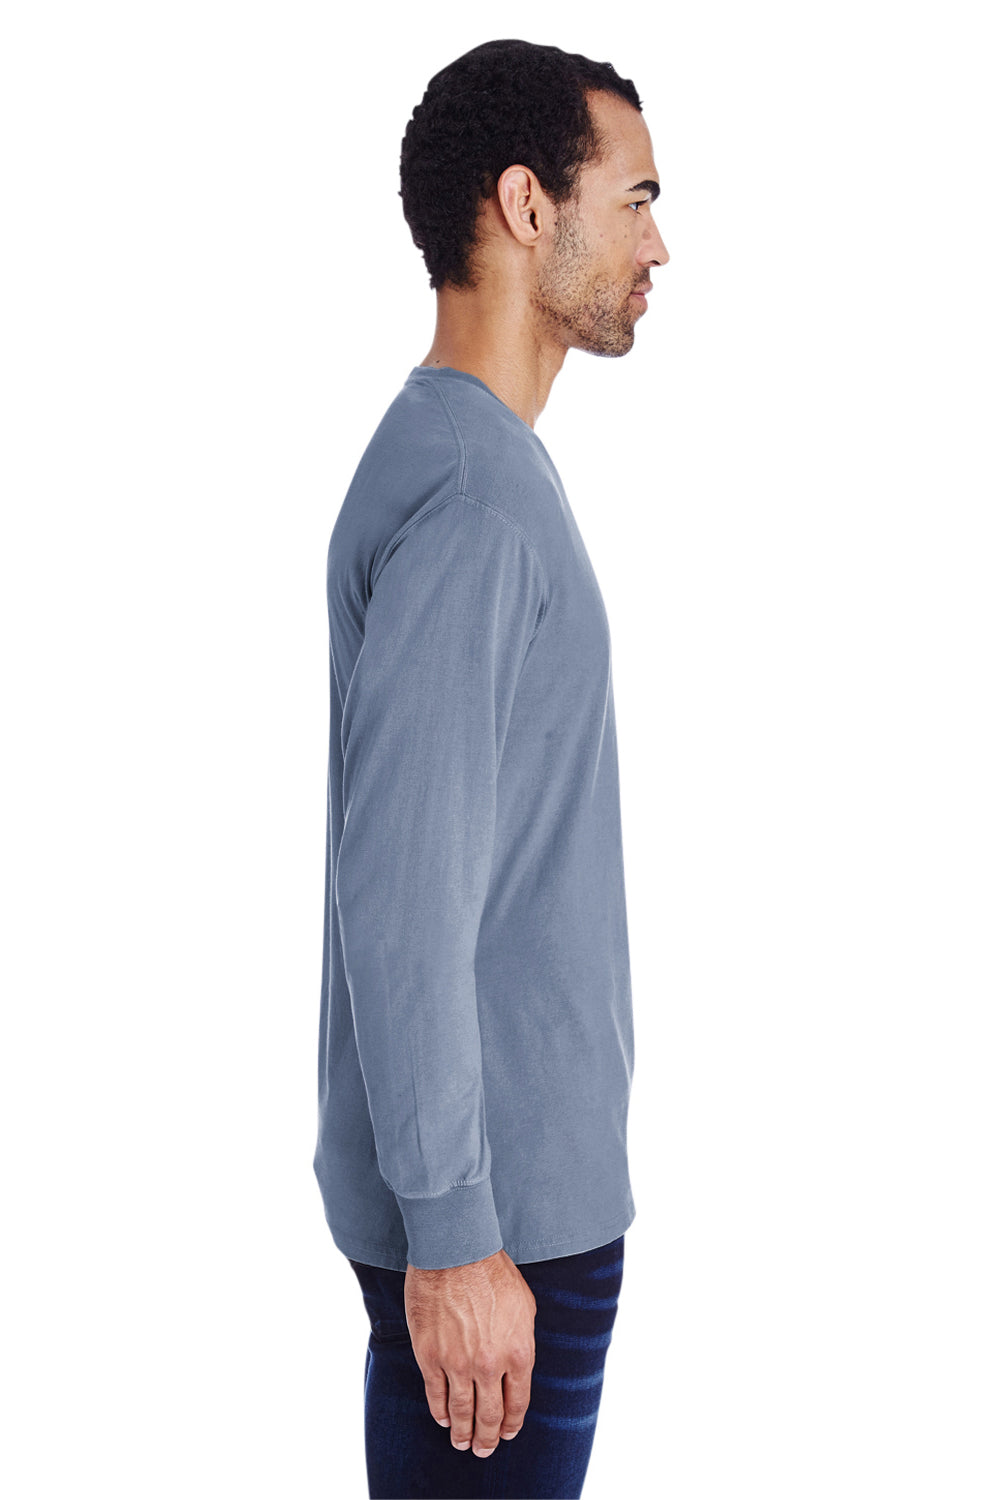 ComfortWash by Hanes GDH200 Long Sleeve Crewneck T-Shirt Saltwater Blue Side